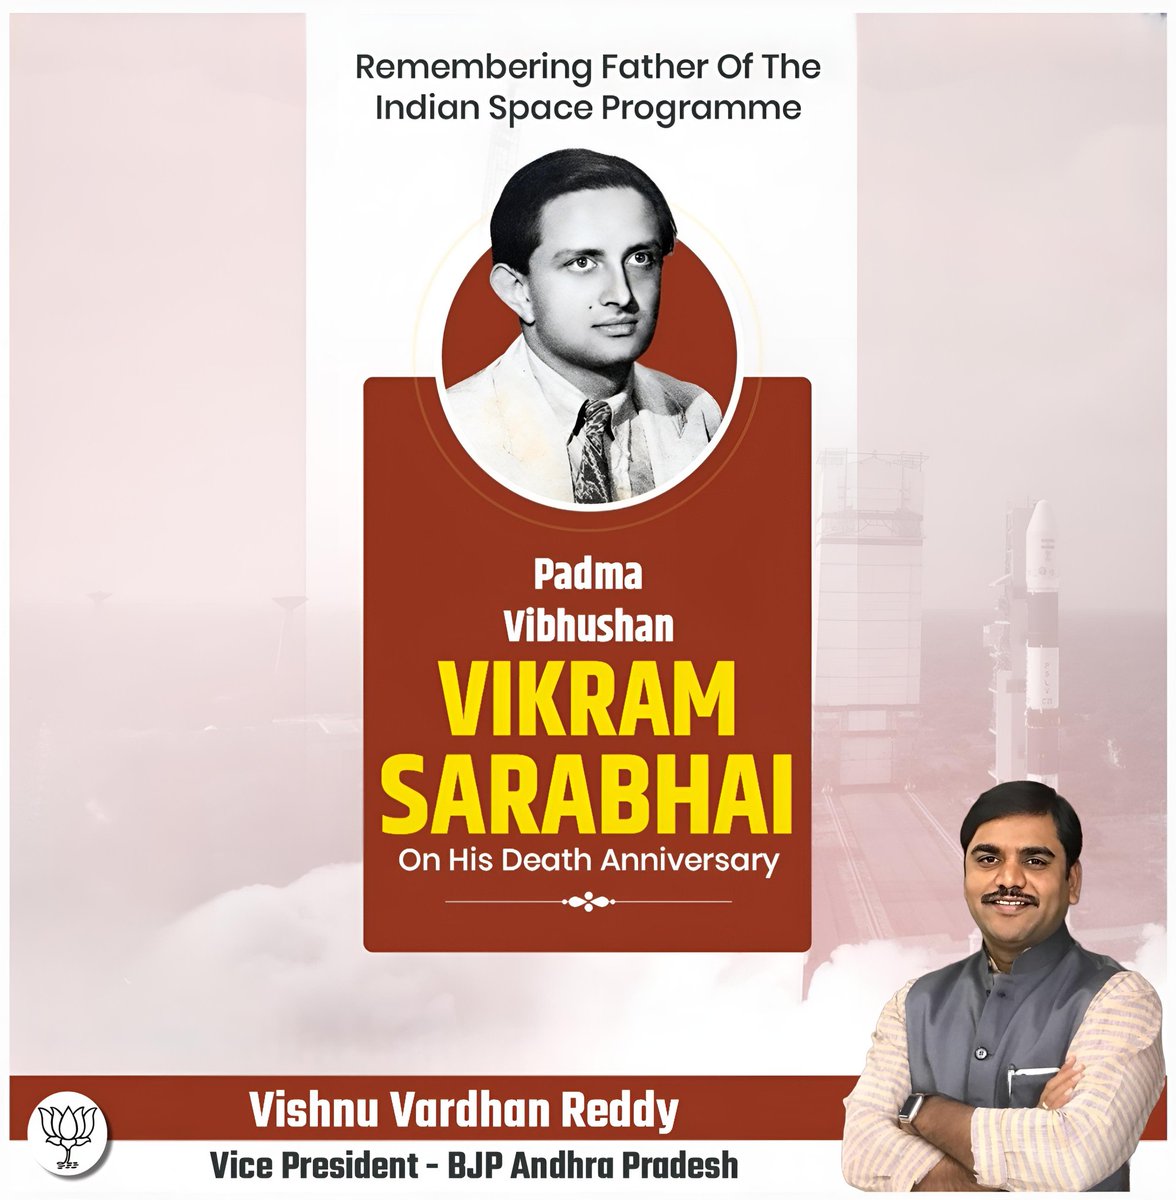 Remembering Dr. Vikram Sarabhai, the visionary & architect of India's space odyssey on his death anniversary.

#VikramSarabhai